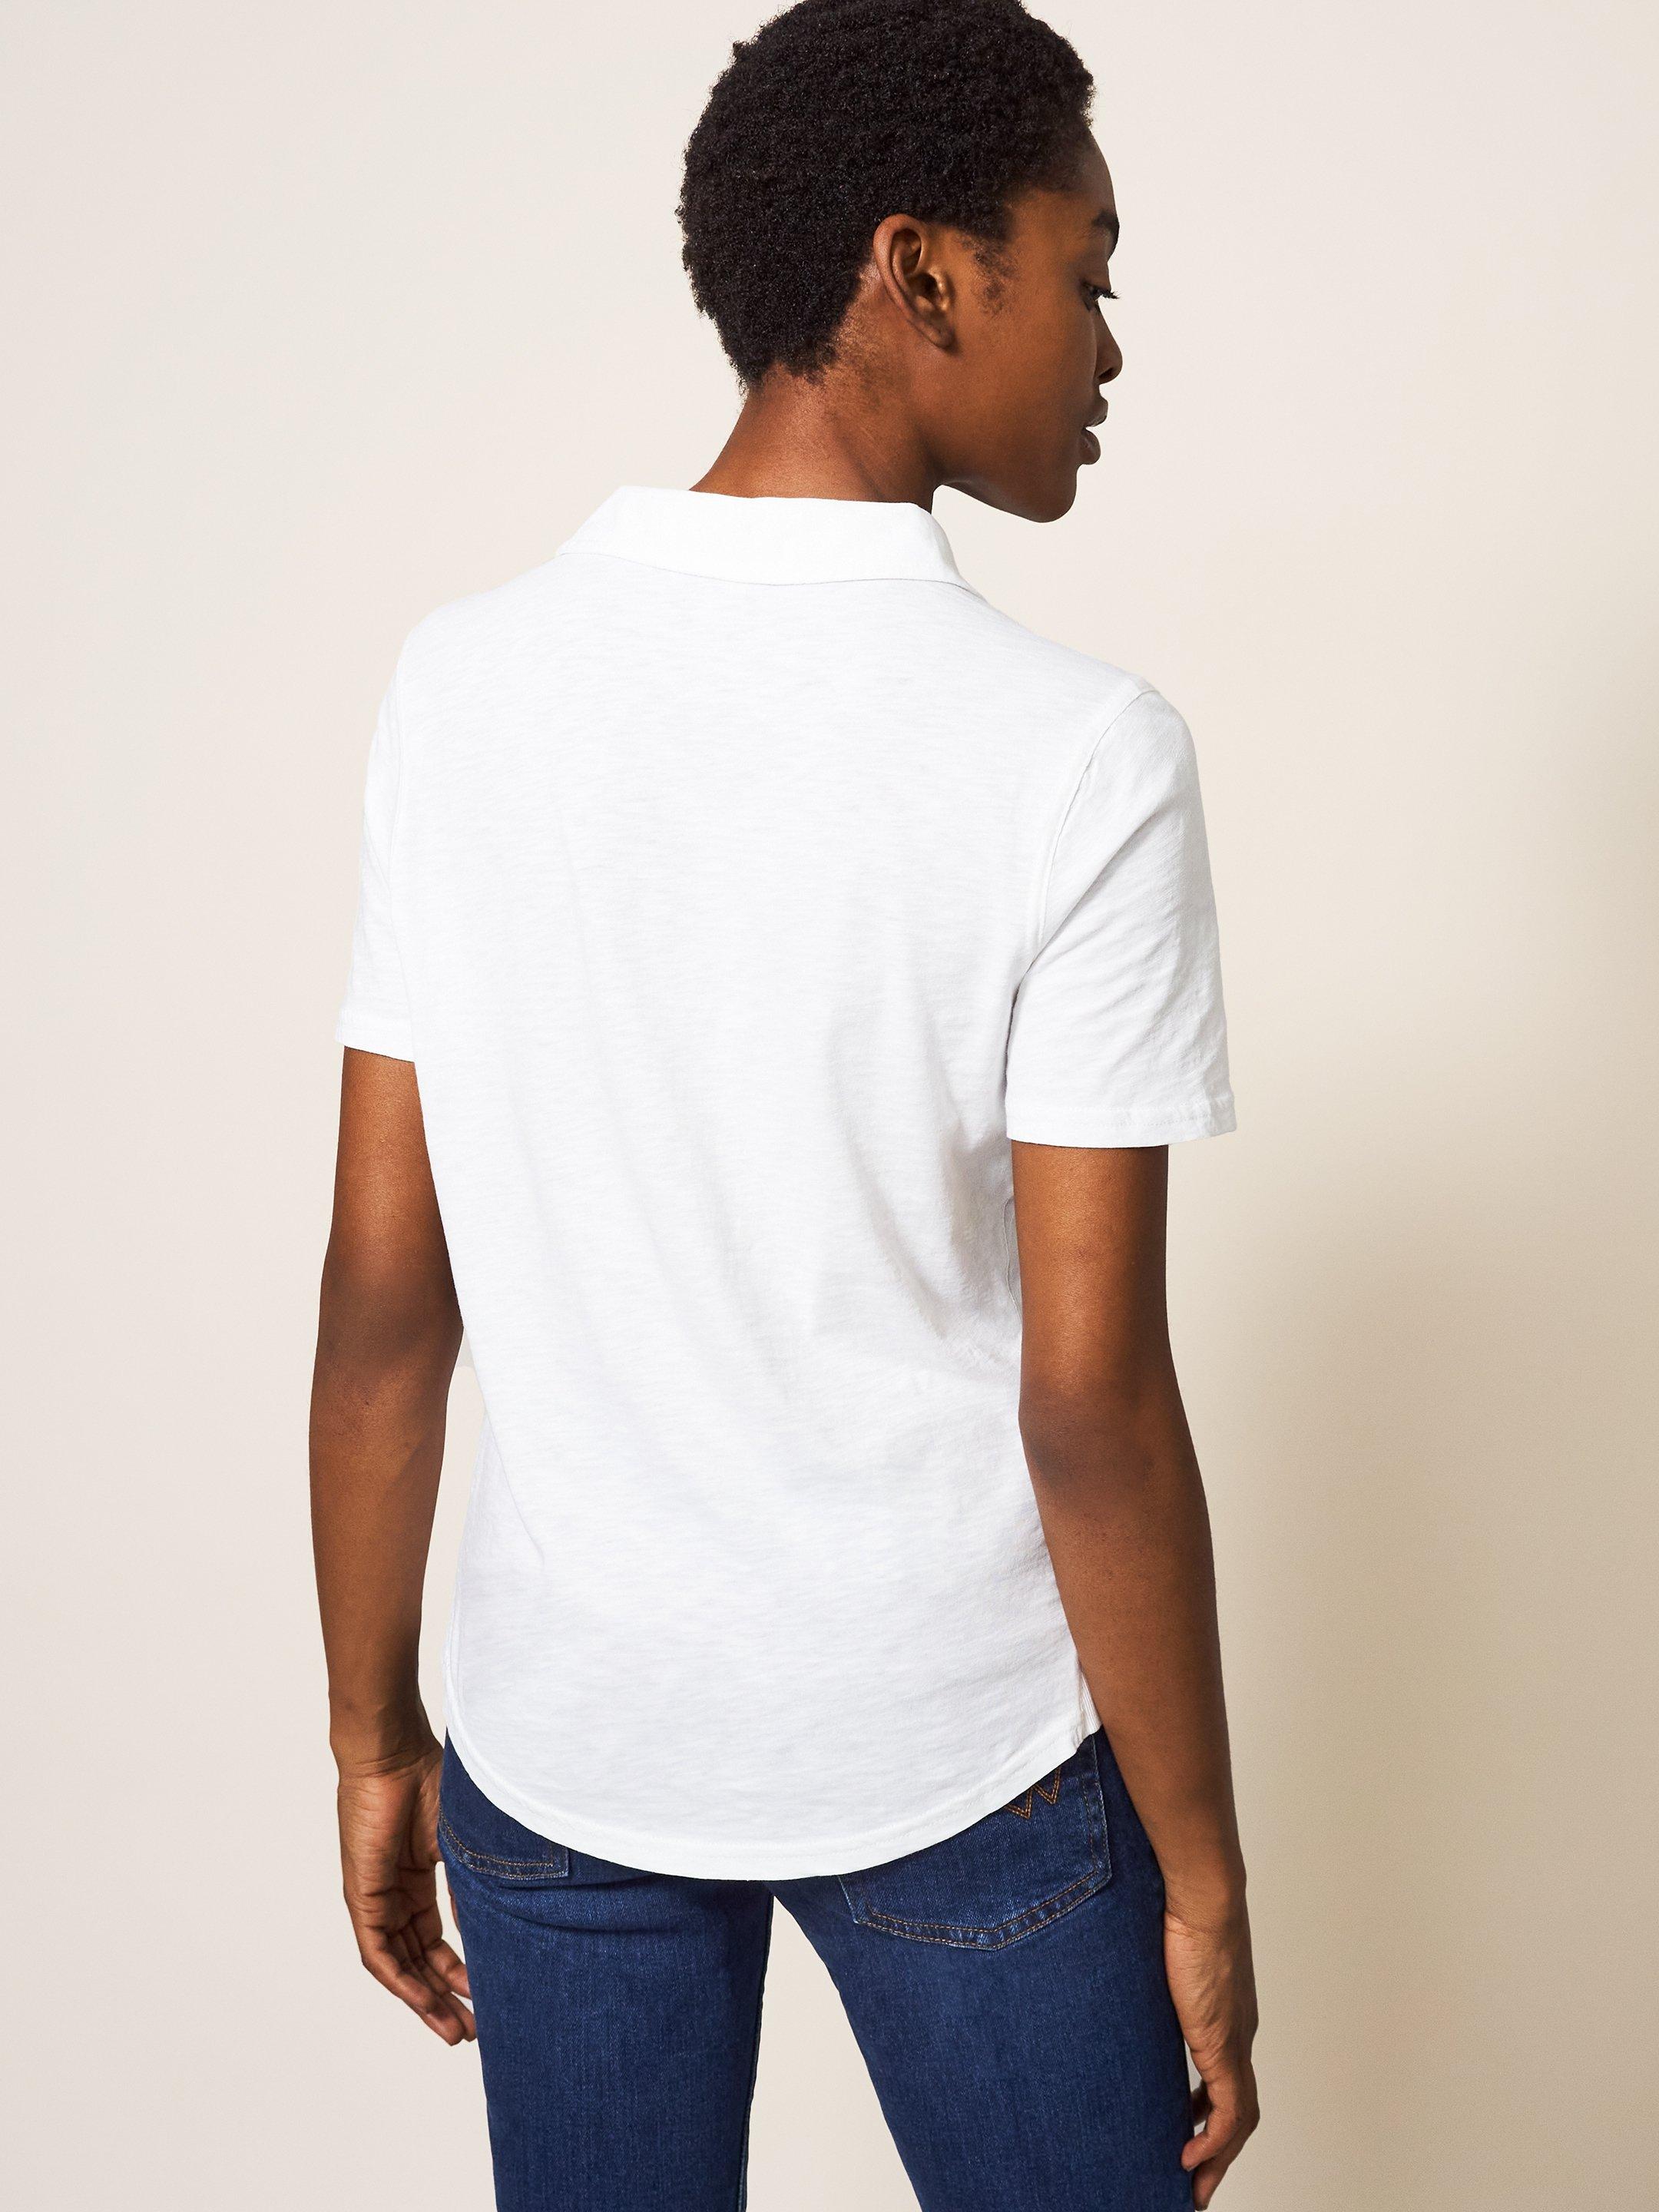 Penny Pocket Jersey Shirt in BRILLIANT WHITE | White Stuff